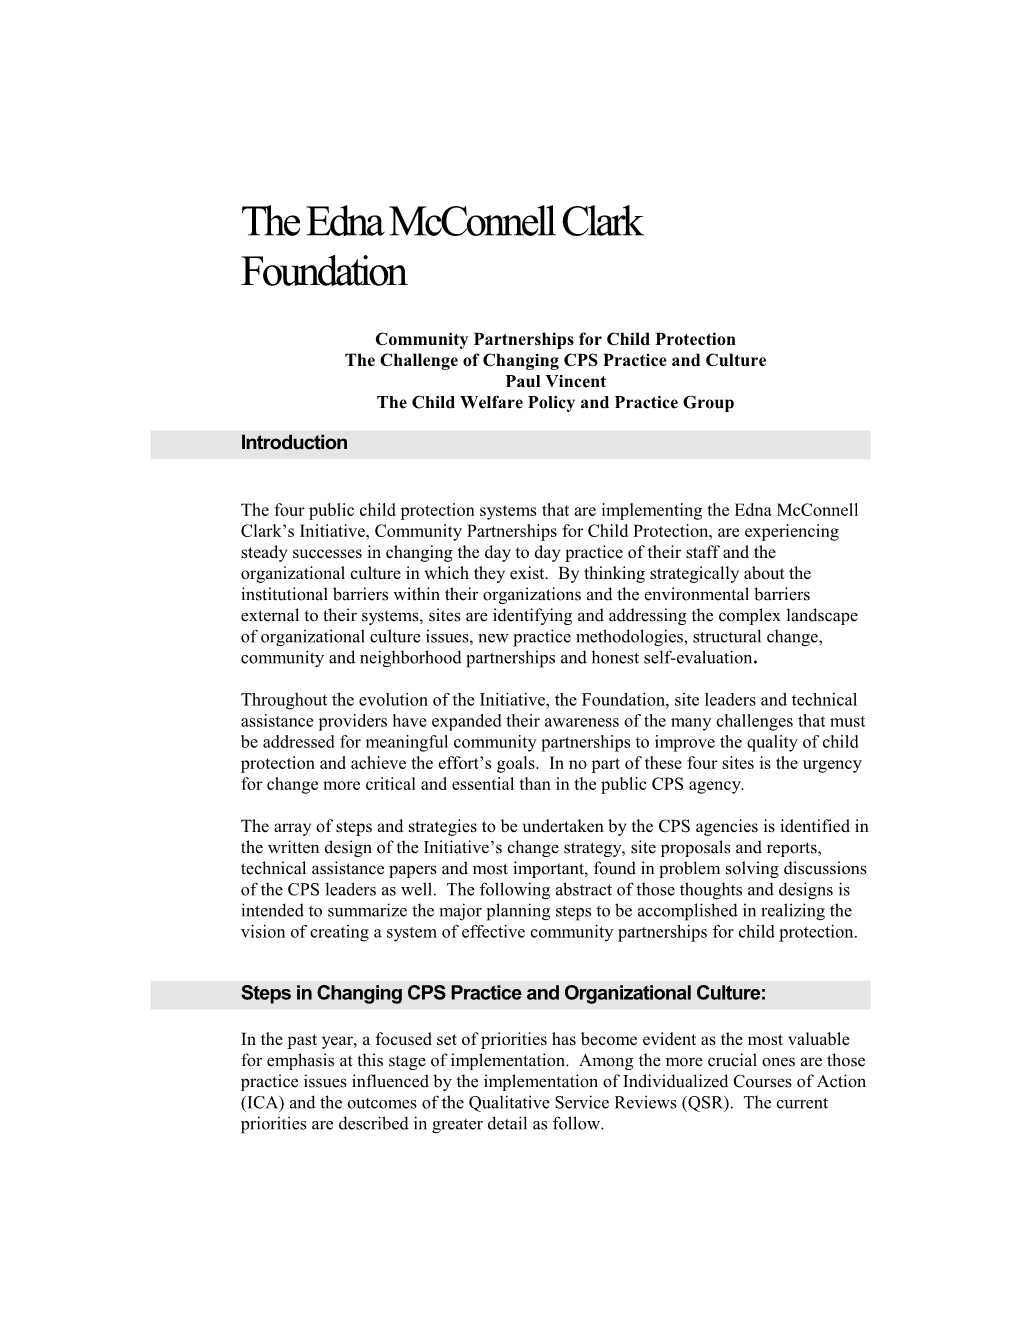 The Edna Mcconnell Clark Foundation